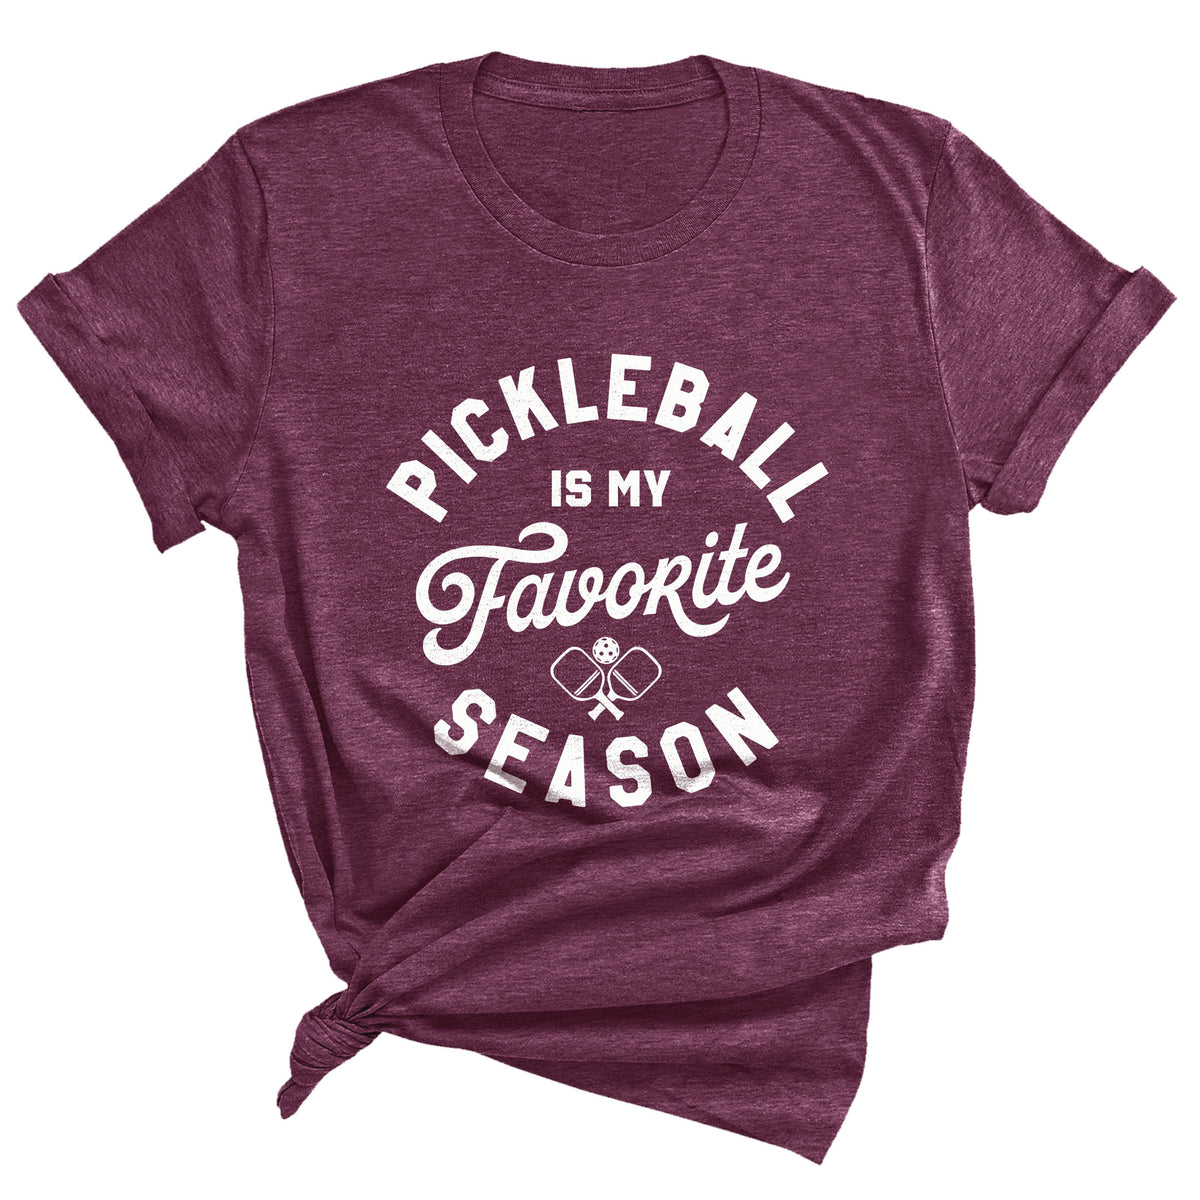 Pickleball is My Favorite Season Unisex T-Shirt